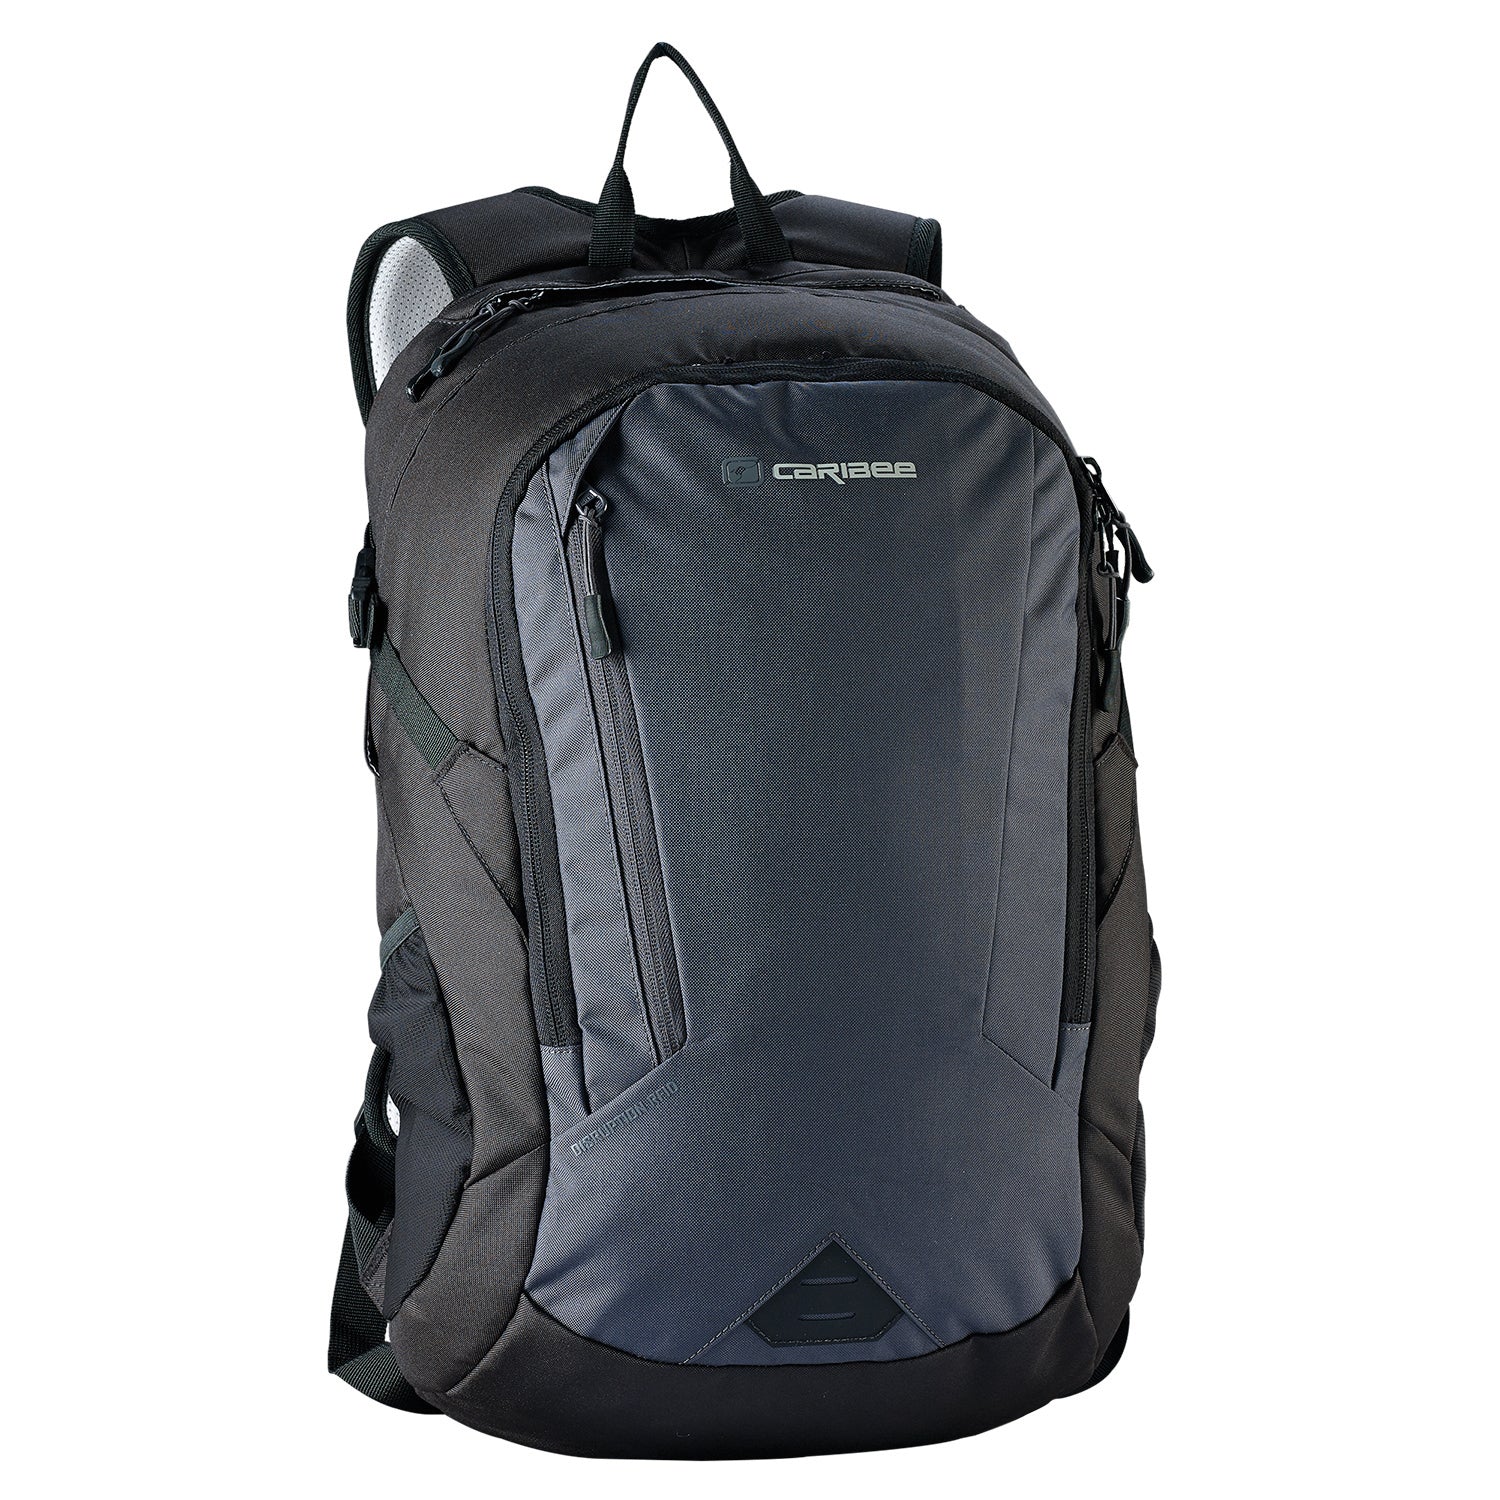 Caribee Disruption backpack in asphalt/black